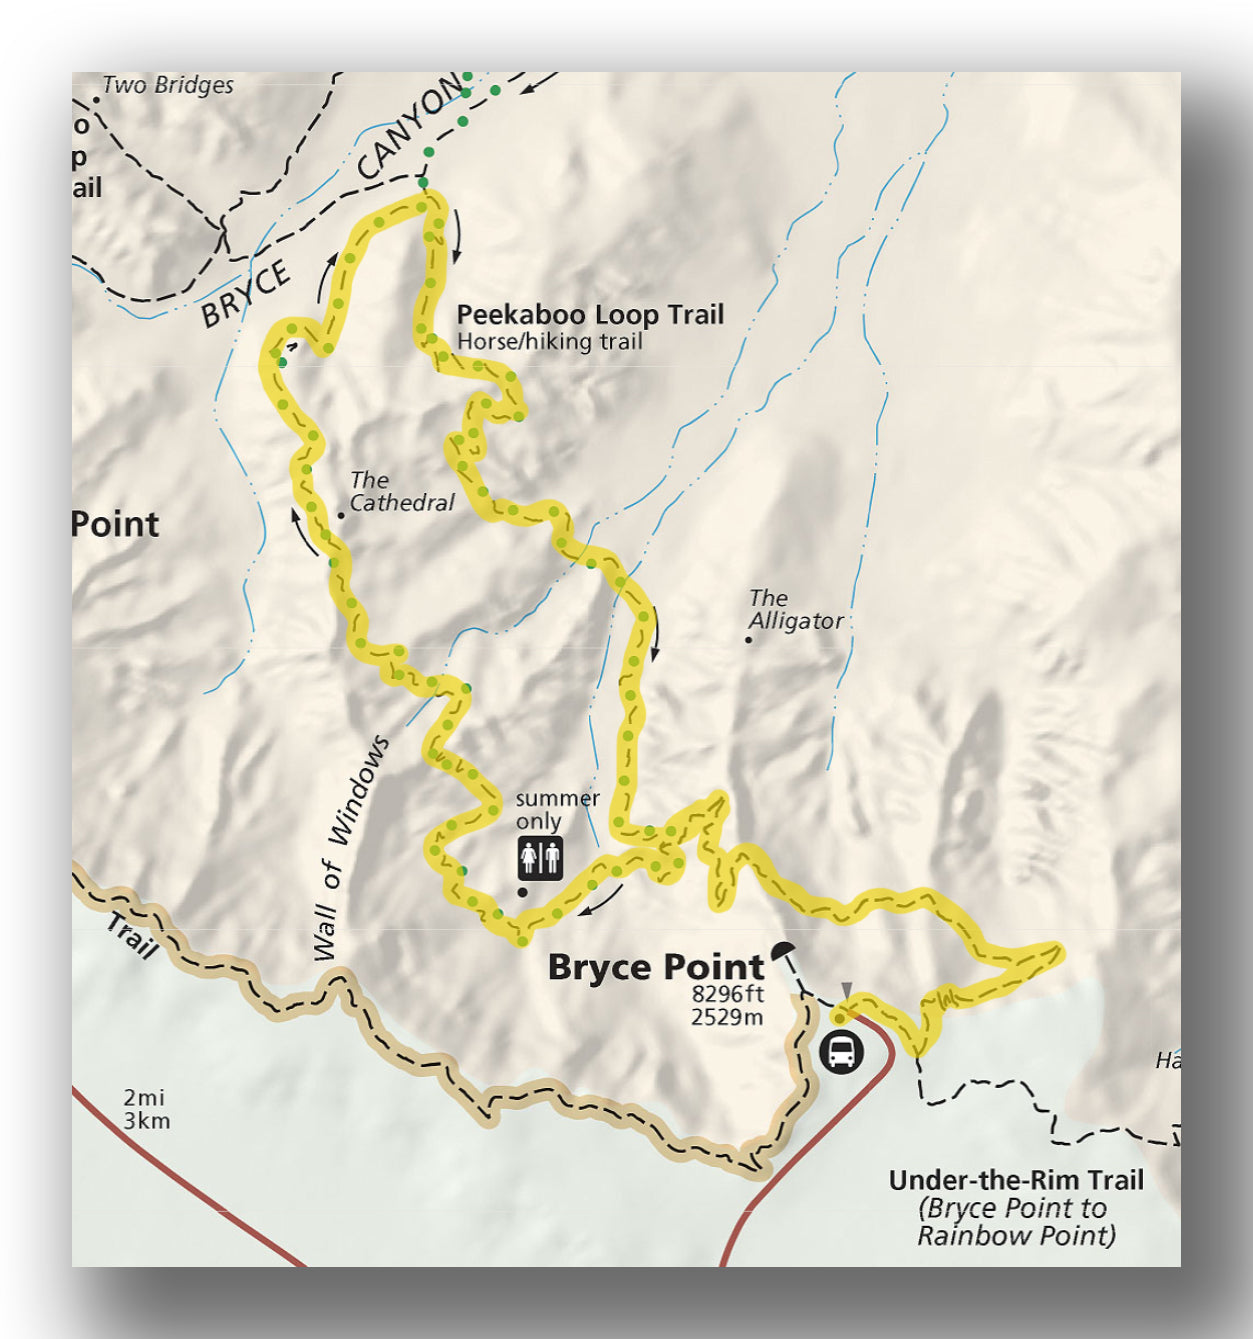 Peekaboo Loop Trail in Bryce Canyon national Park